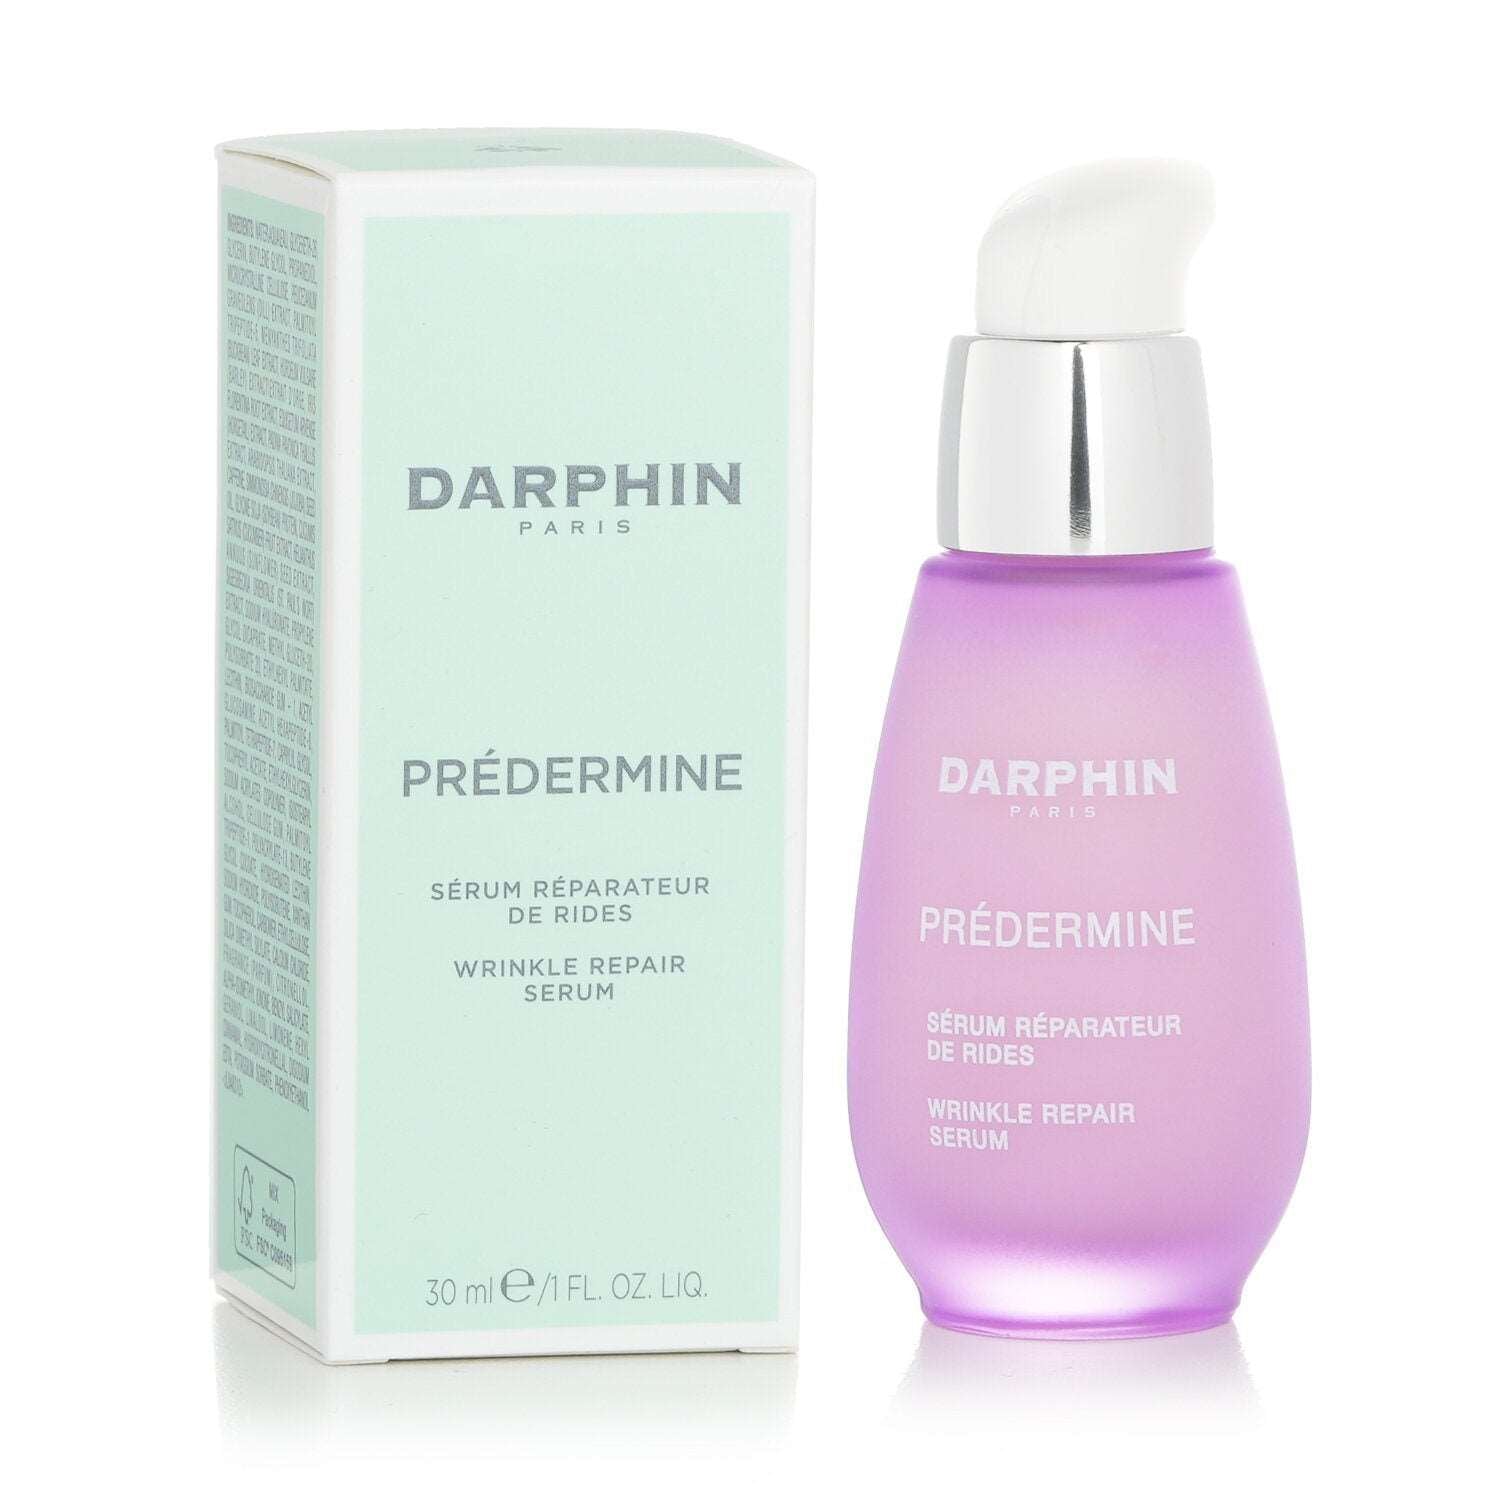 DARPHIN - Predermine Wrinkle Repair Serum - 30ml/1oz 3P's Inclusive Beauty